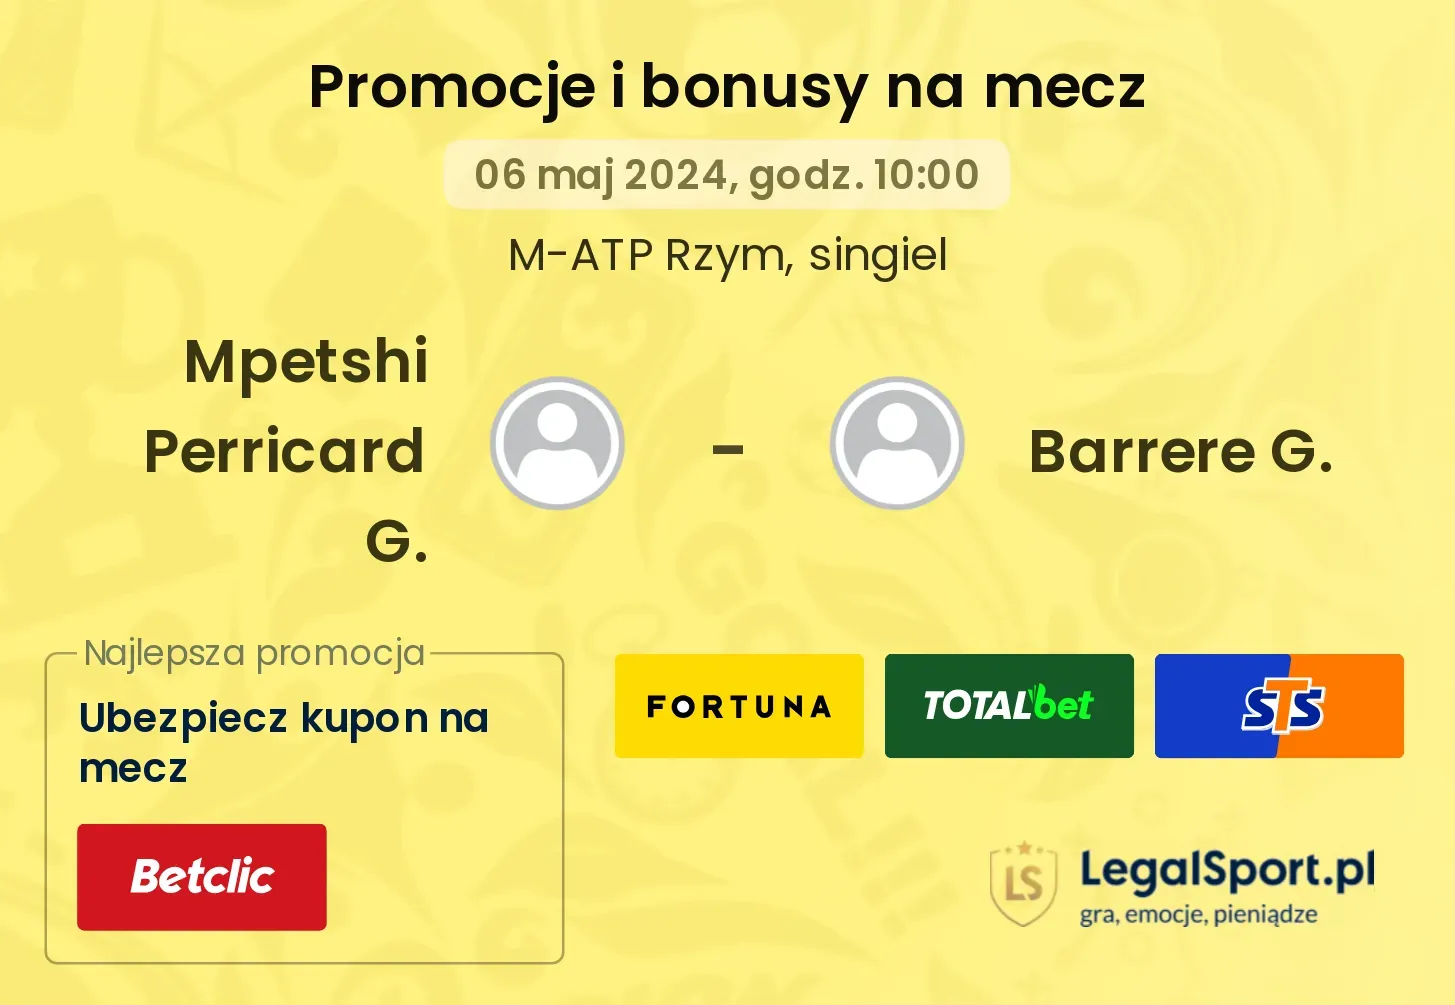 Mpetshi Perricard G. - Barrere G. promocje bonusy na mecz